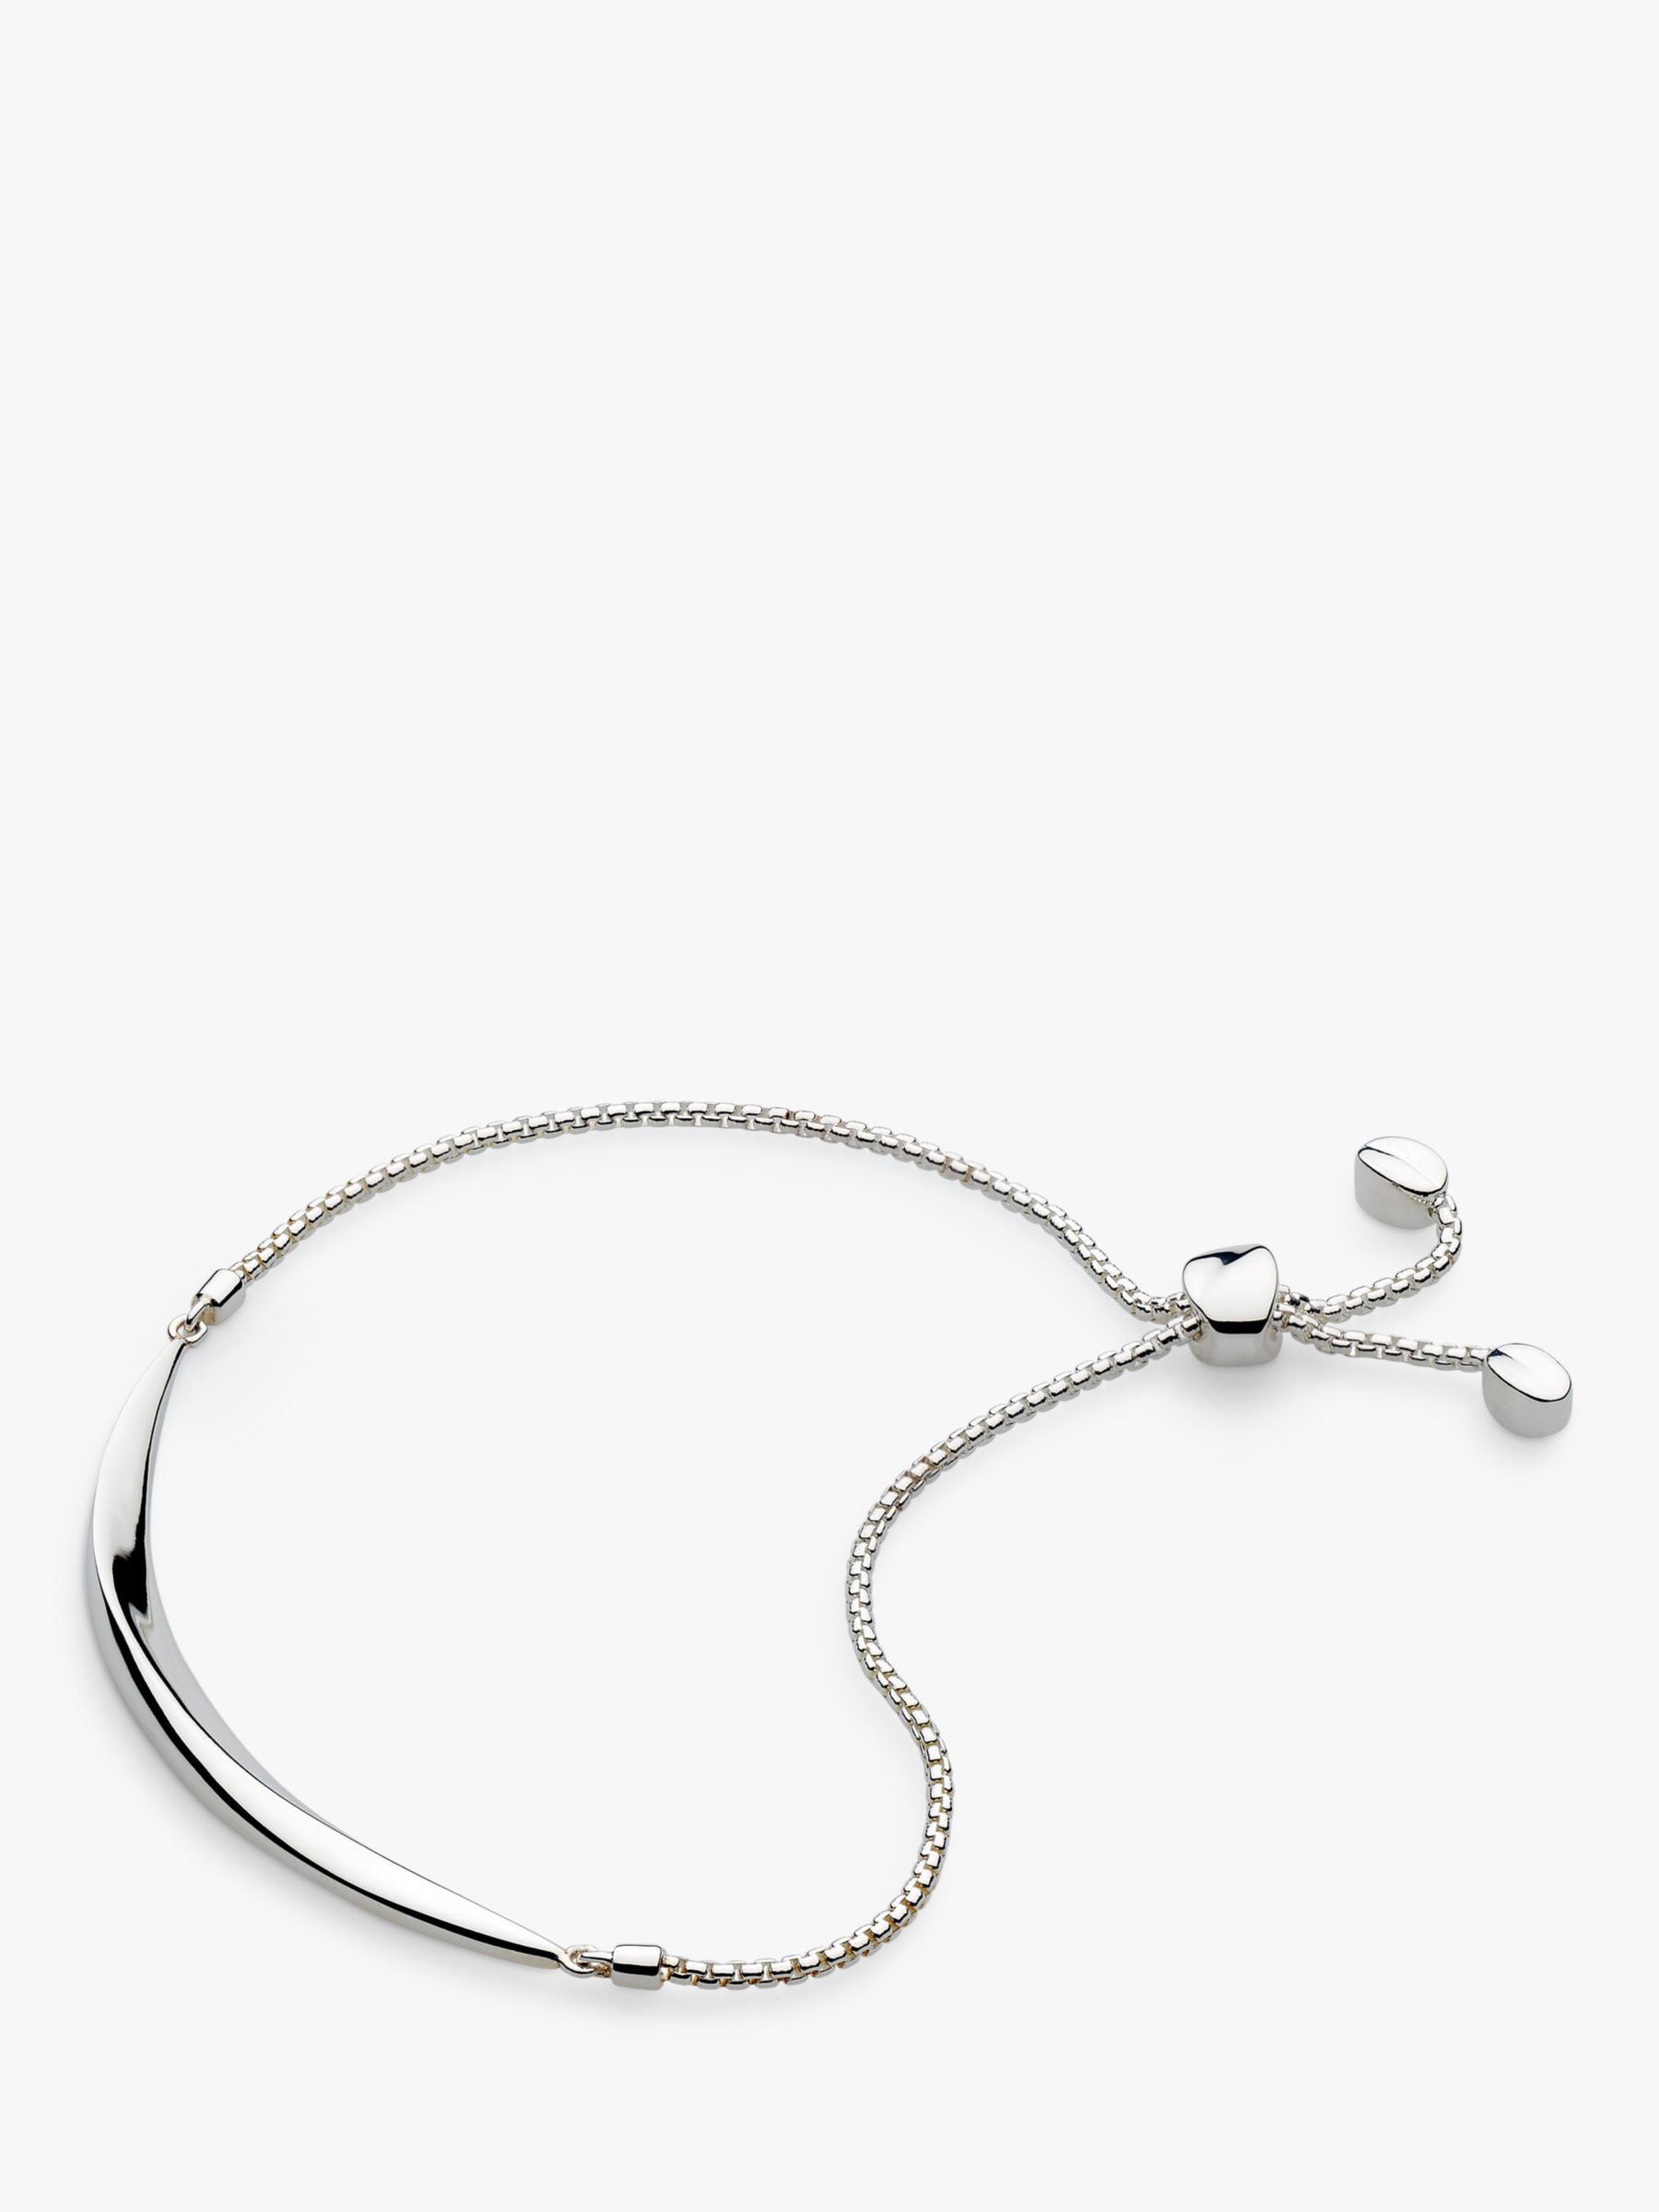 Kit Heath Bevel Curve Bar Toggle Bracelet, Silver